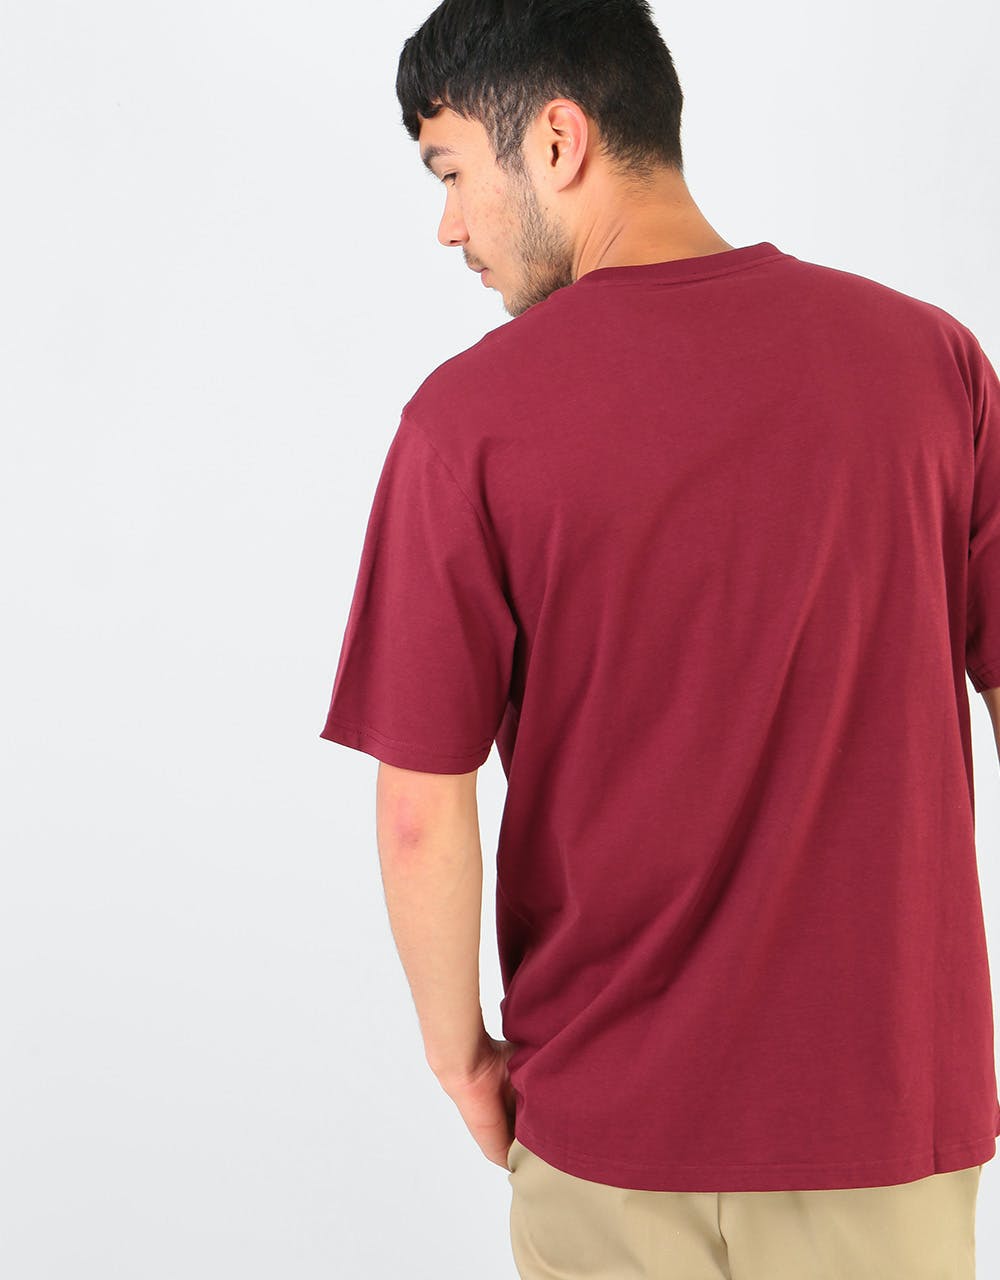 Carhartt WIP S/S Pocket T-Shirt - Cranberry